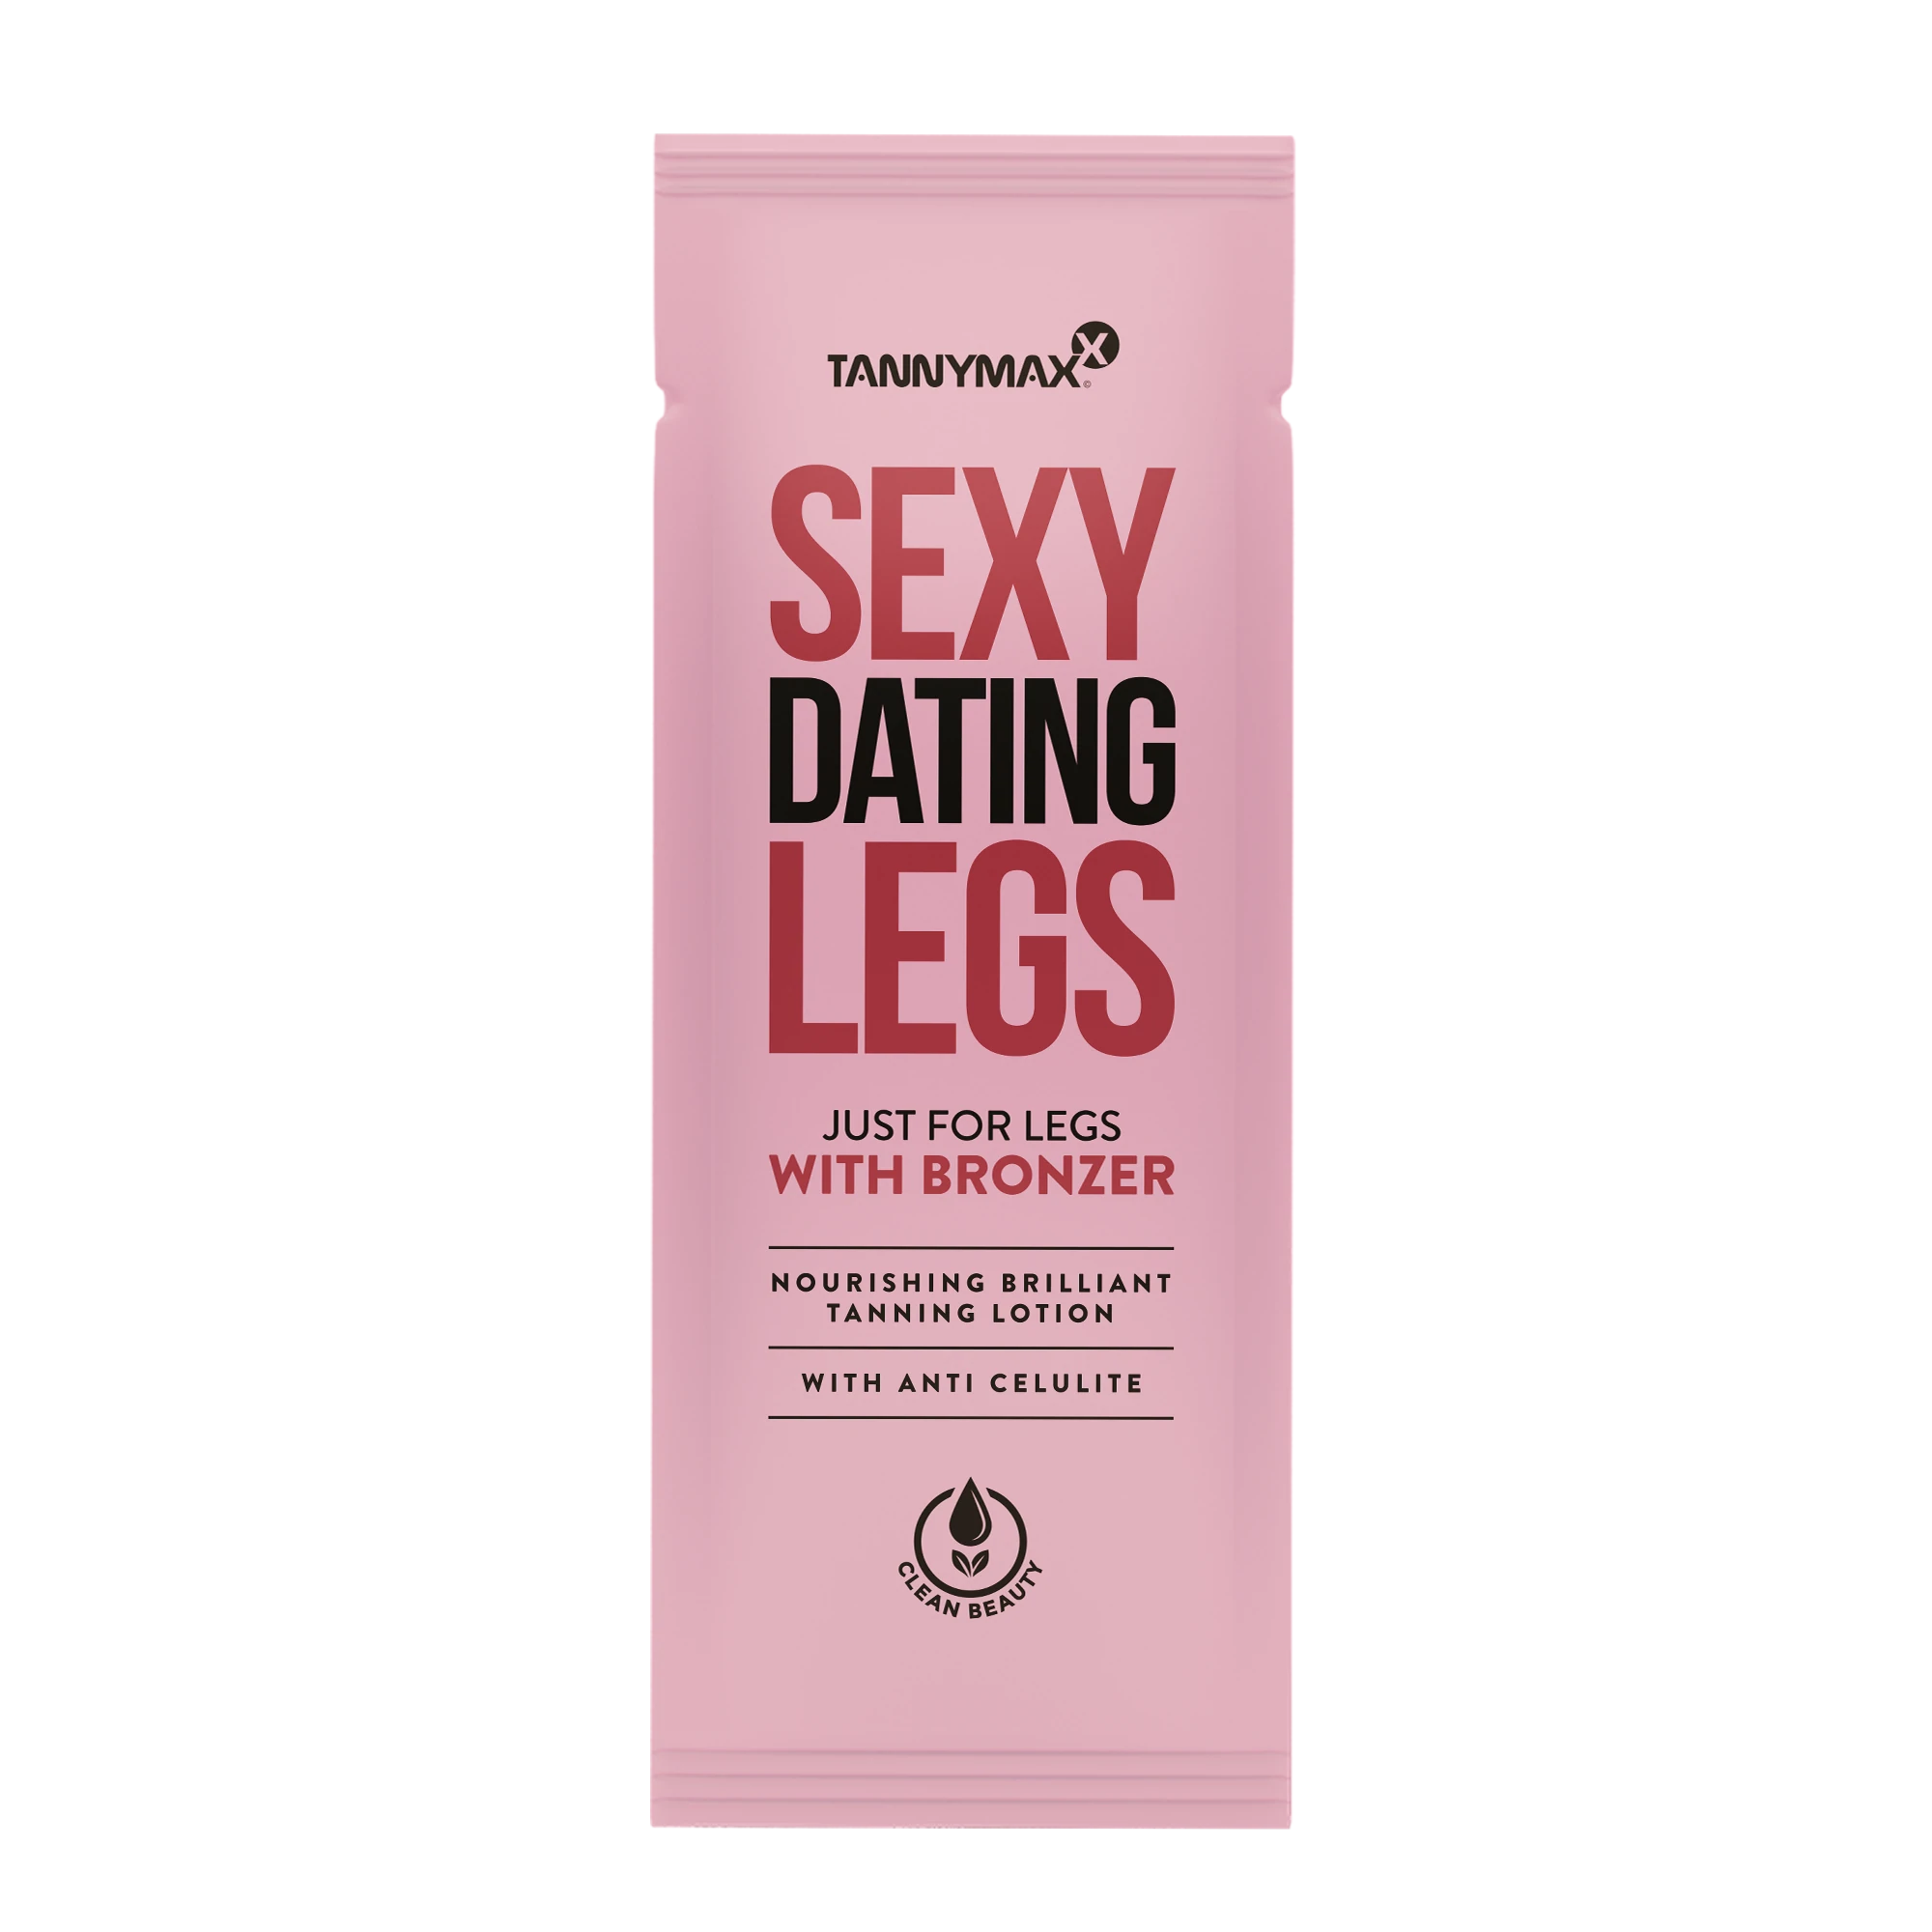 Tannymaxx Sexy Datings Legs Bronzer  15 ml  NEW